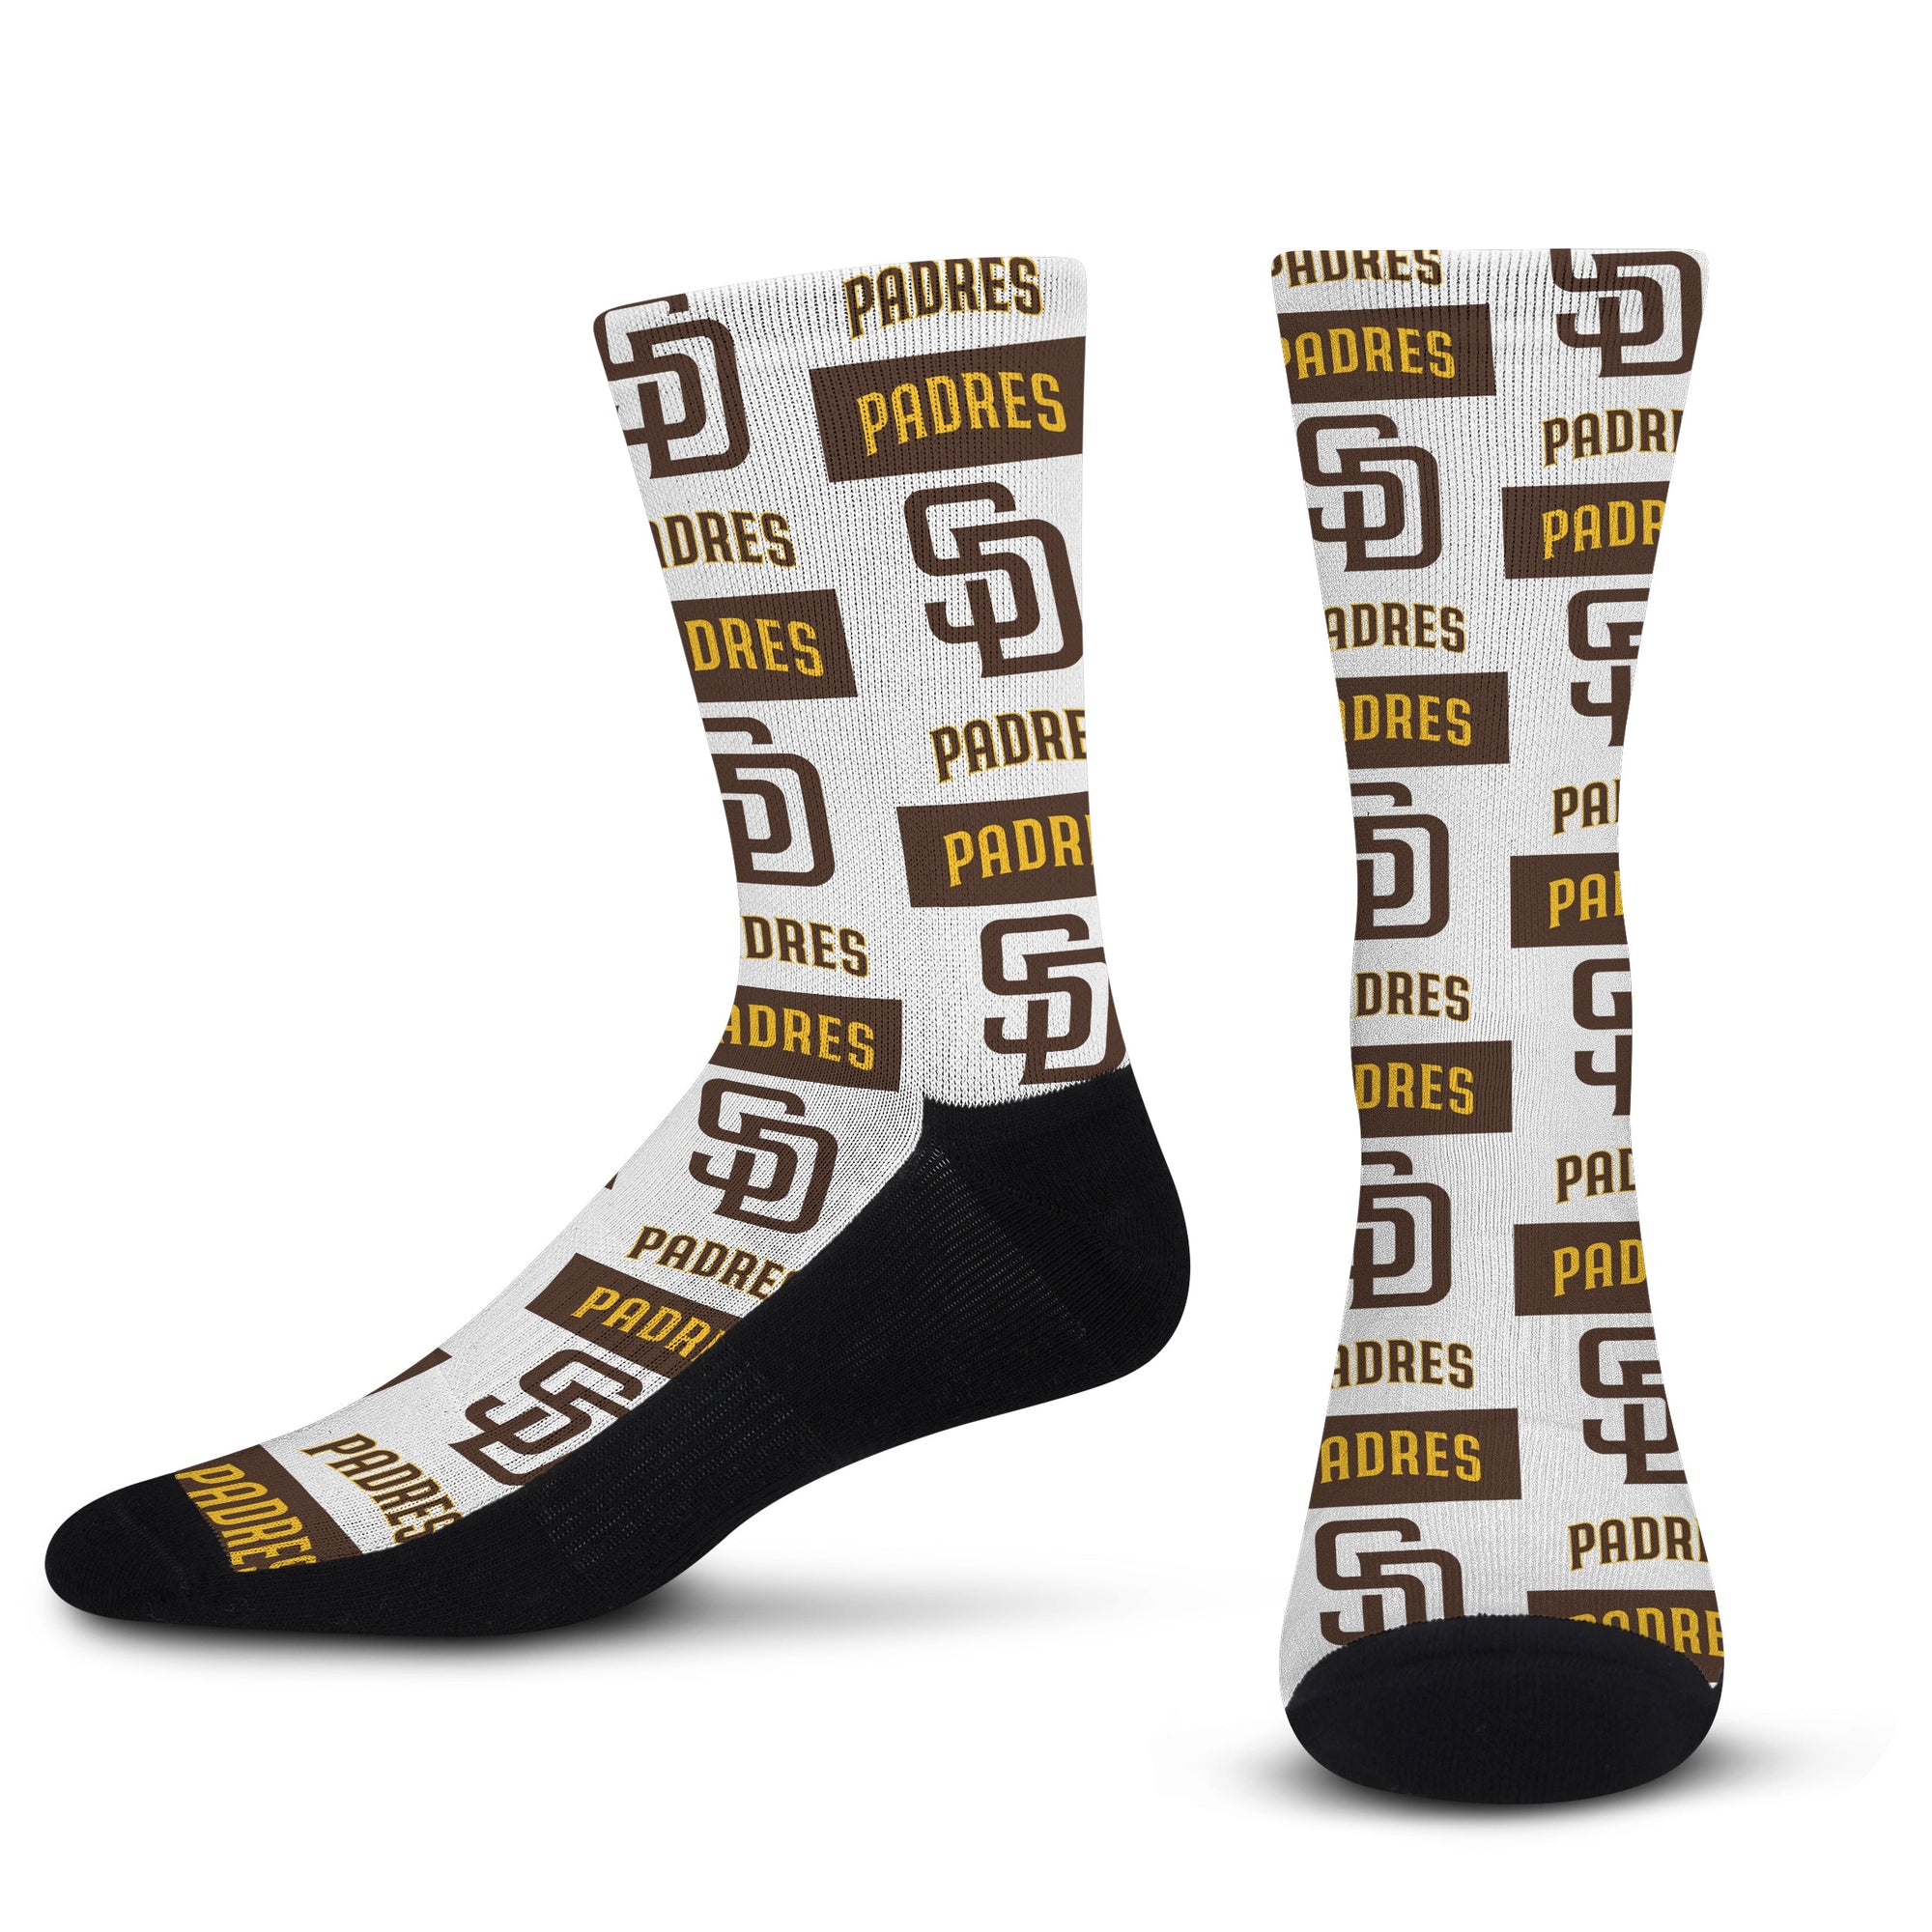 San Diego Padres - Poster Print Socks